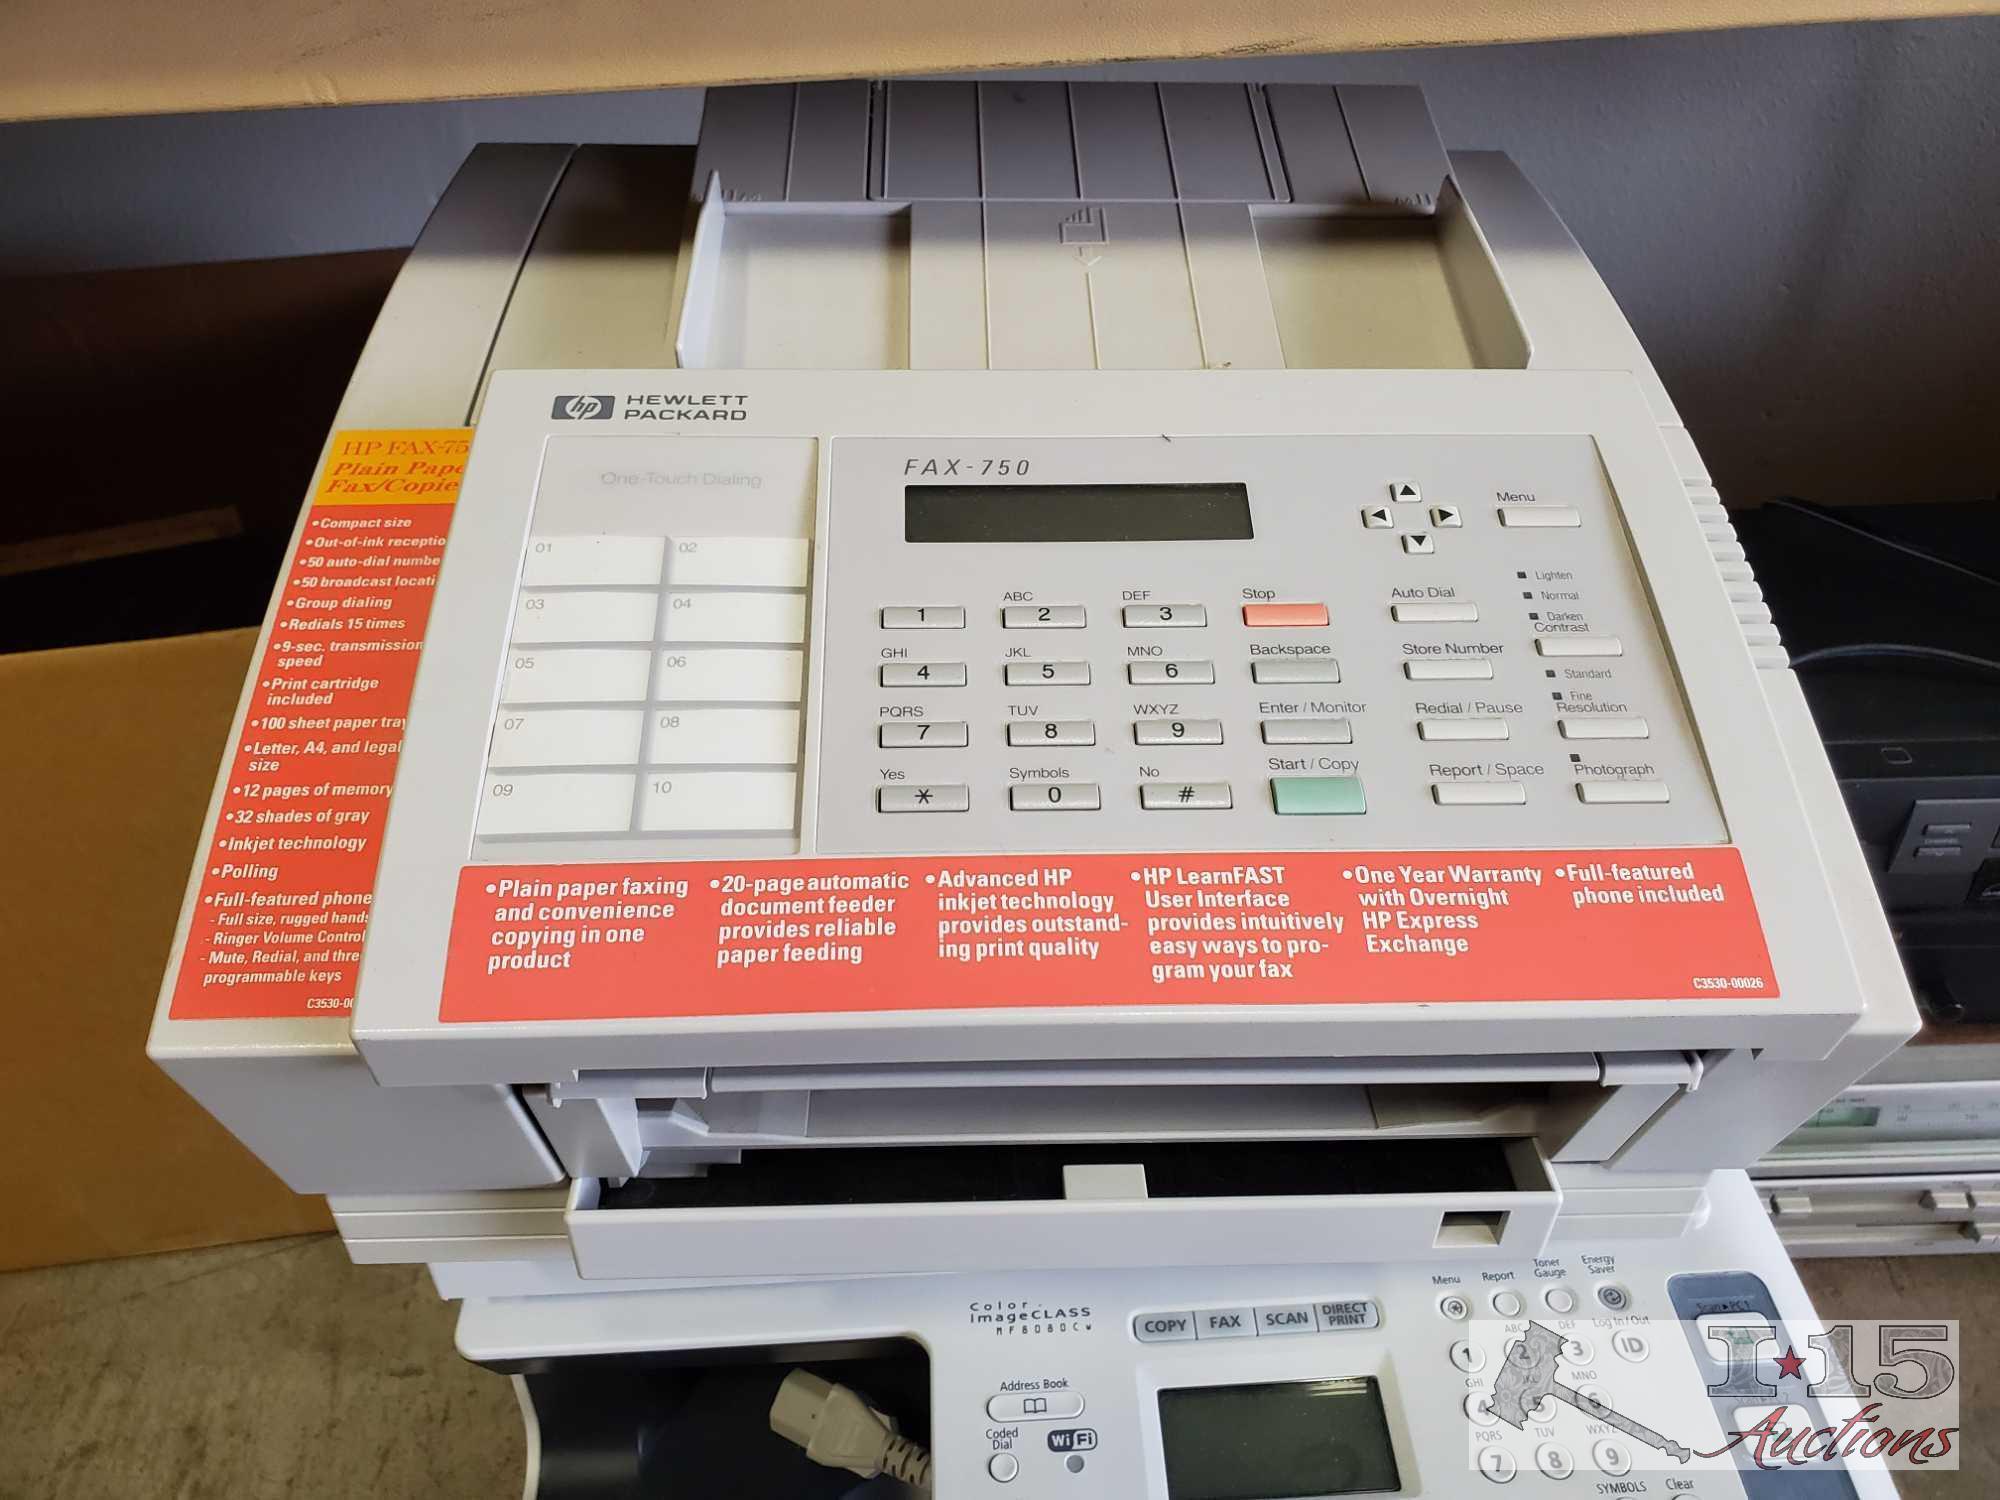 Canon Printer/Copy Machine and a Hewlett Packard Fax-750